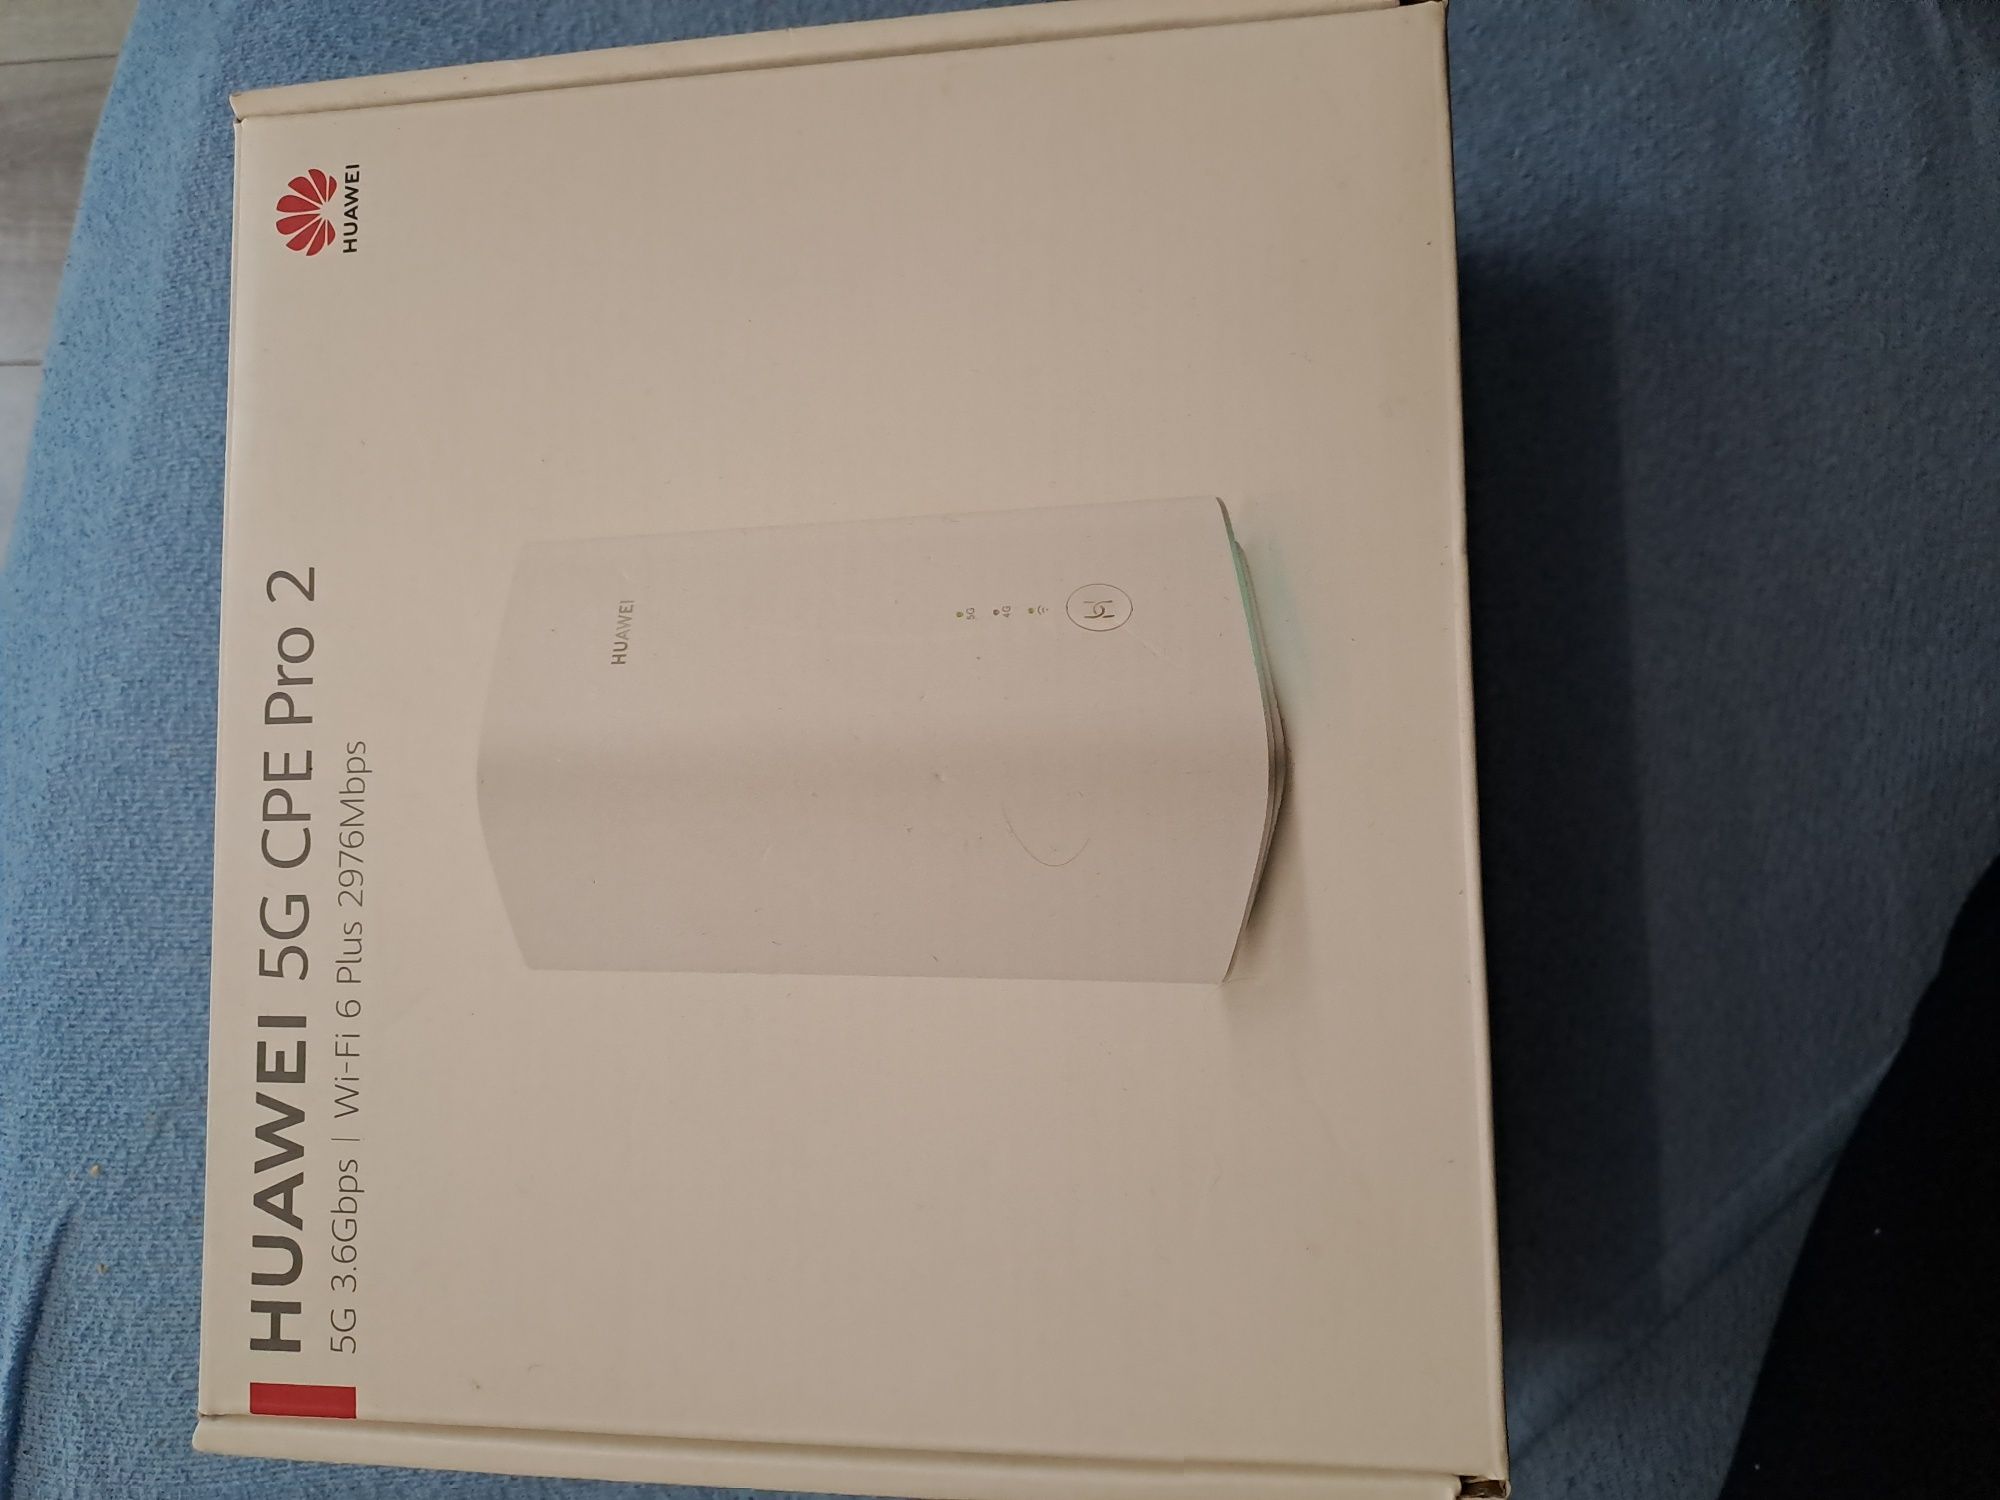 Router Huawei 5G CPE Pro2